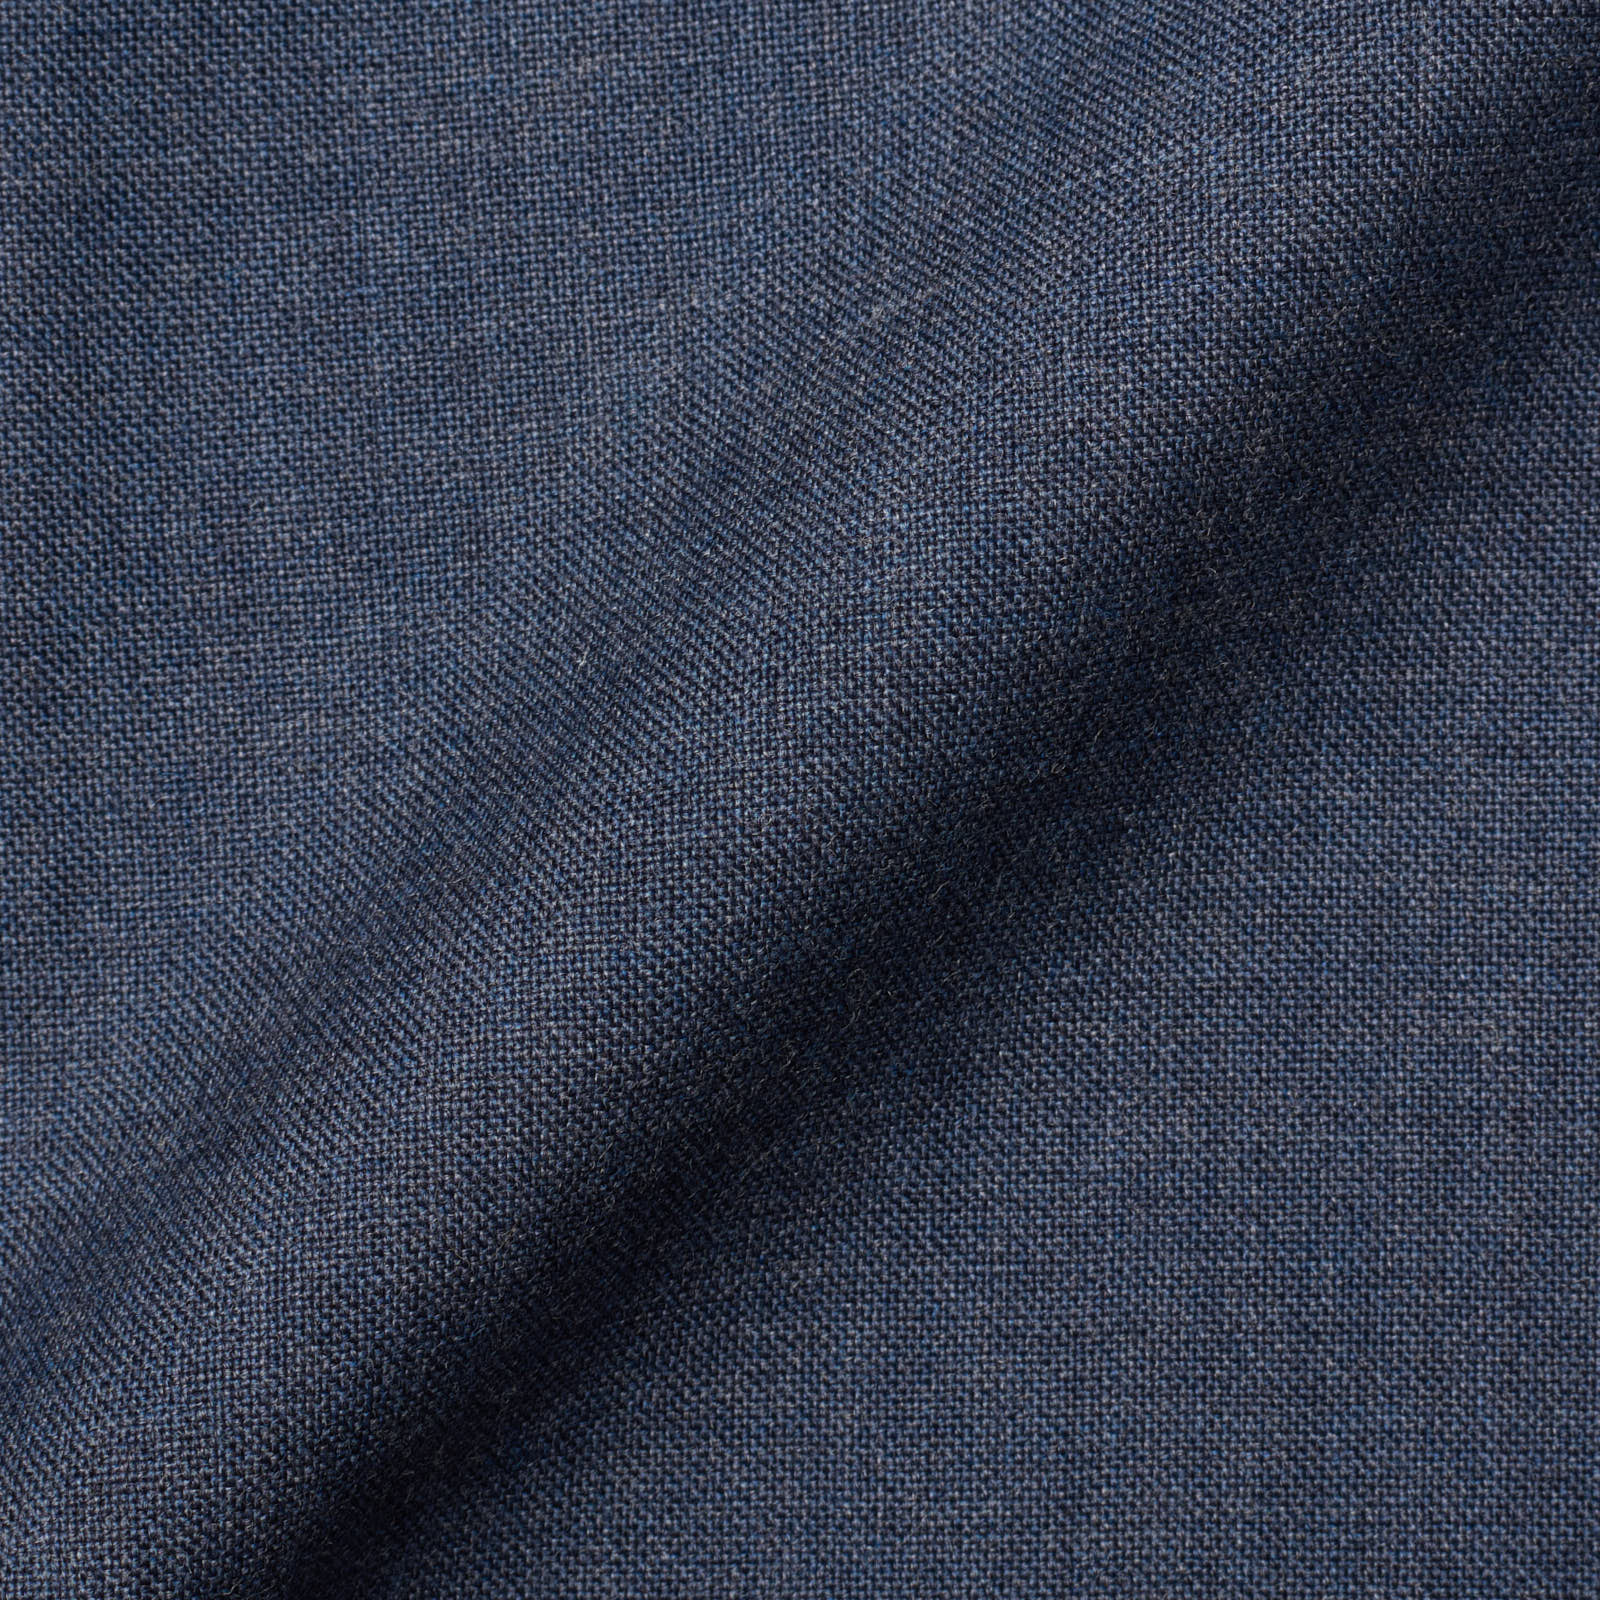 SARTORIA SOLITO Napoli Blue Wool Double Breasted Suits EU 48 NEW US 38